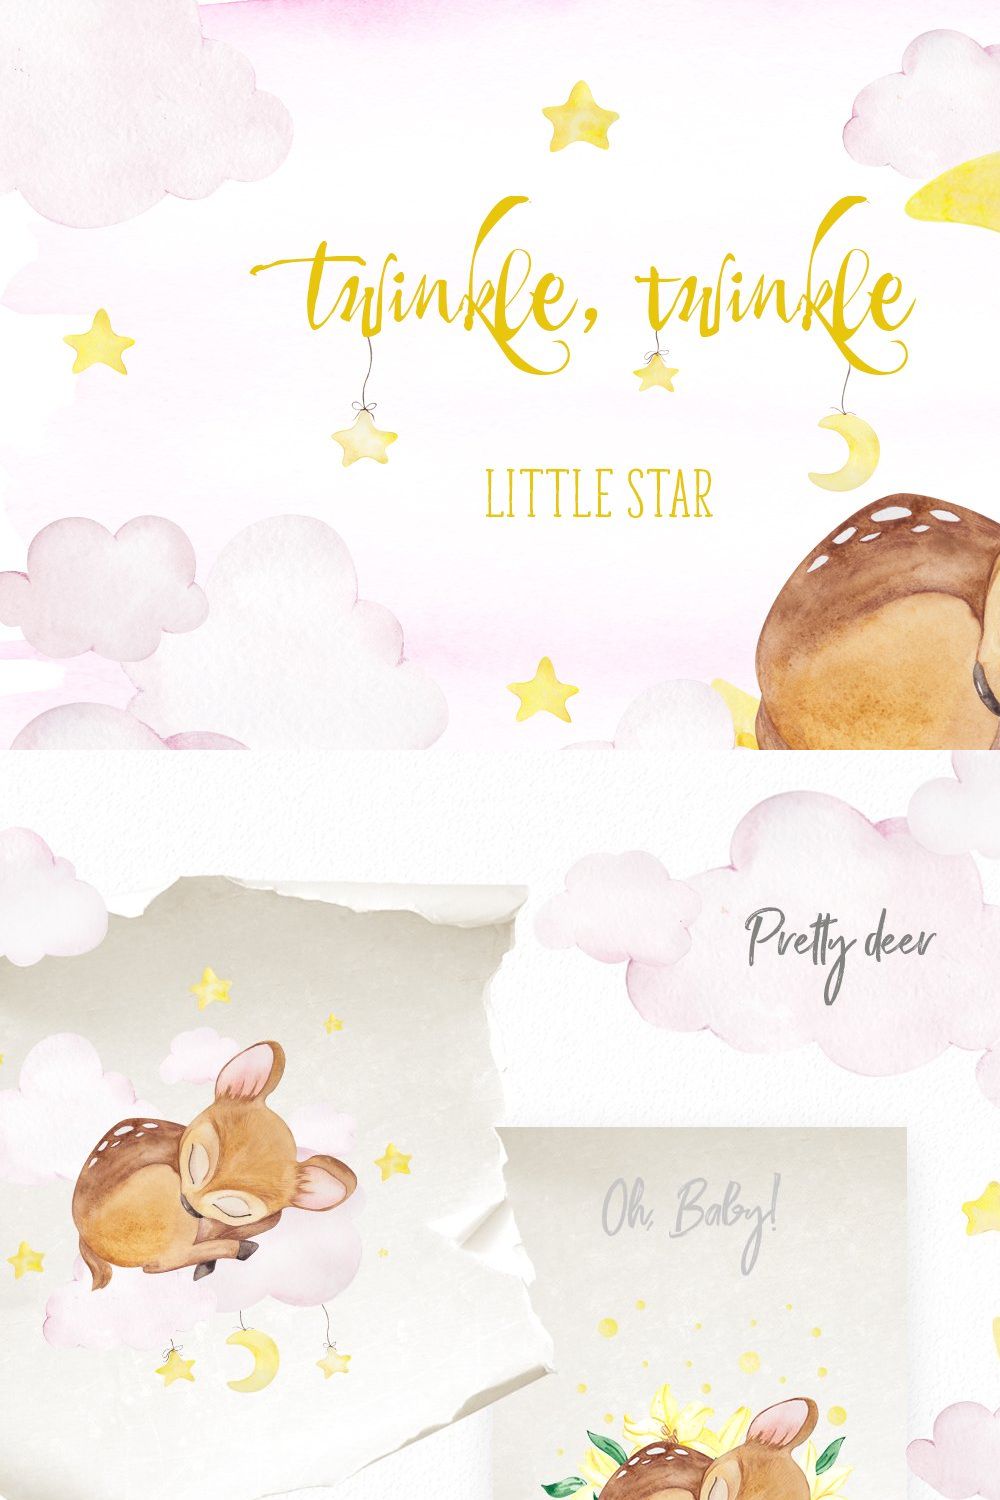 Twinkle, twinkle little star pinterest preview image.